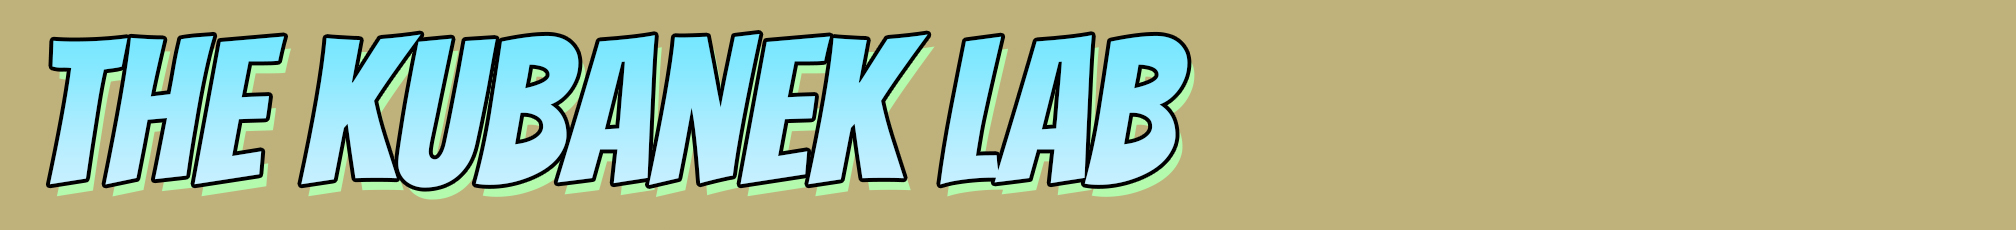 THE KUBANEK LAB in comic font style.